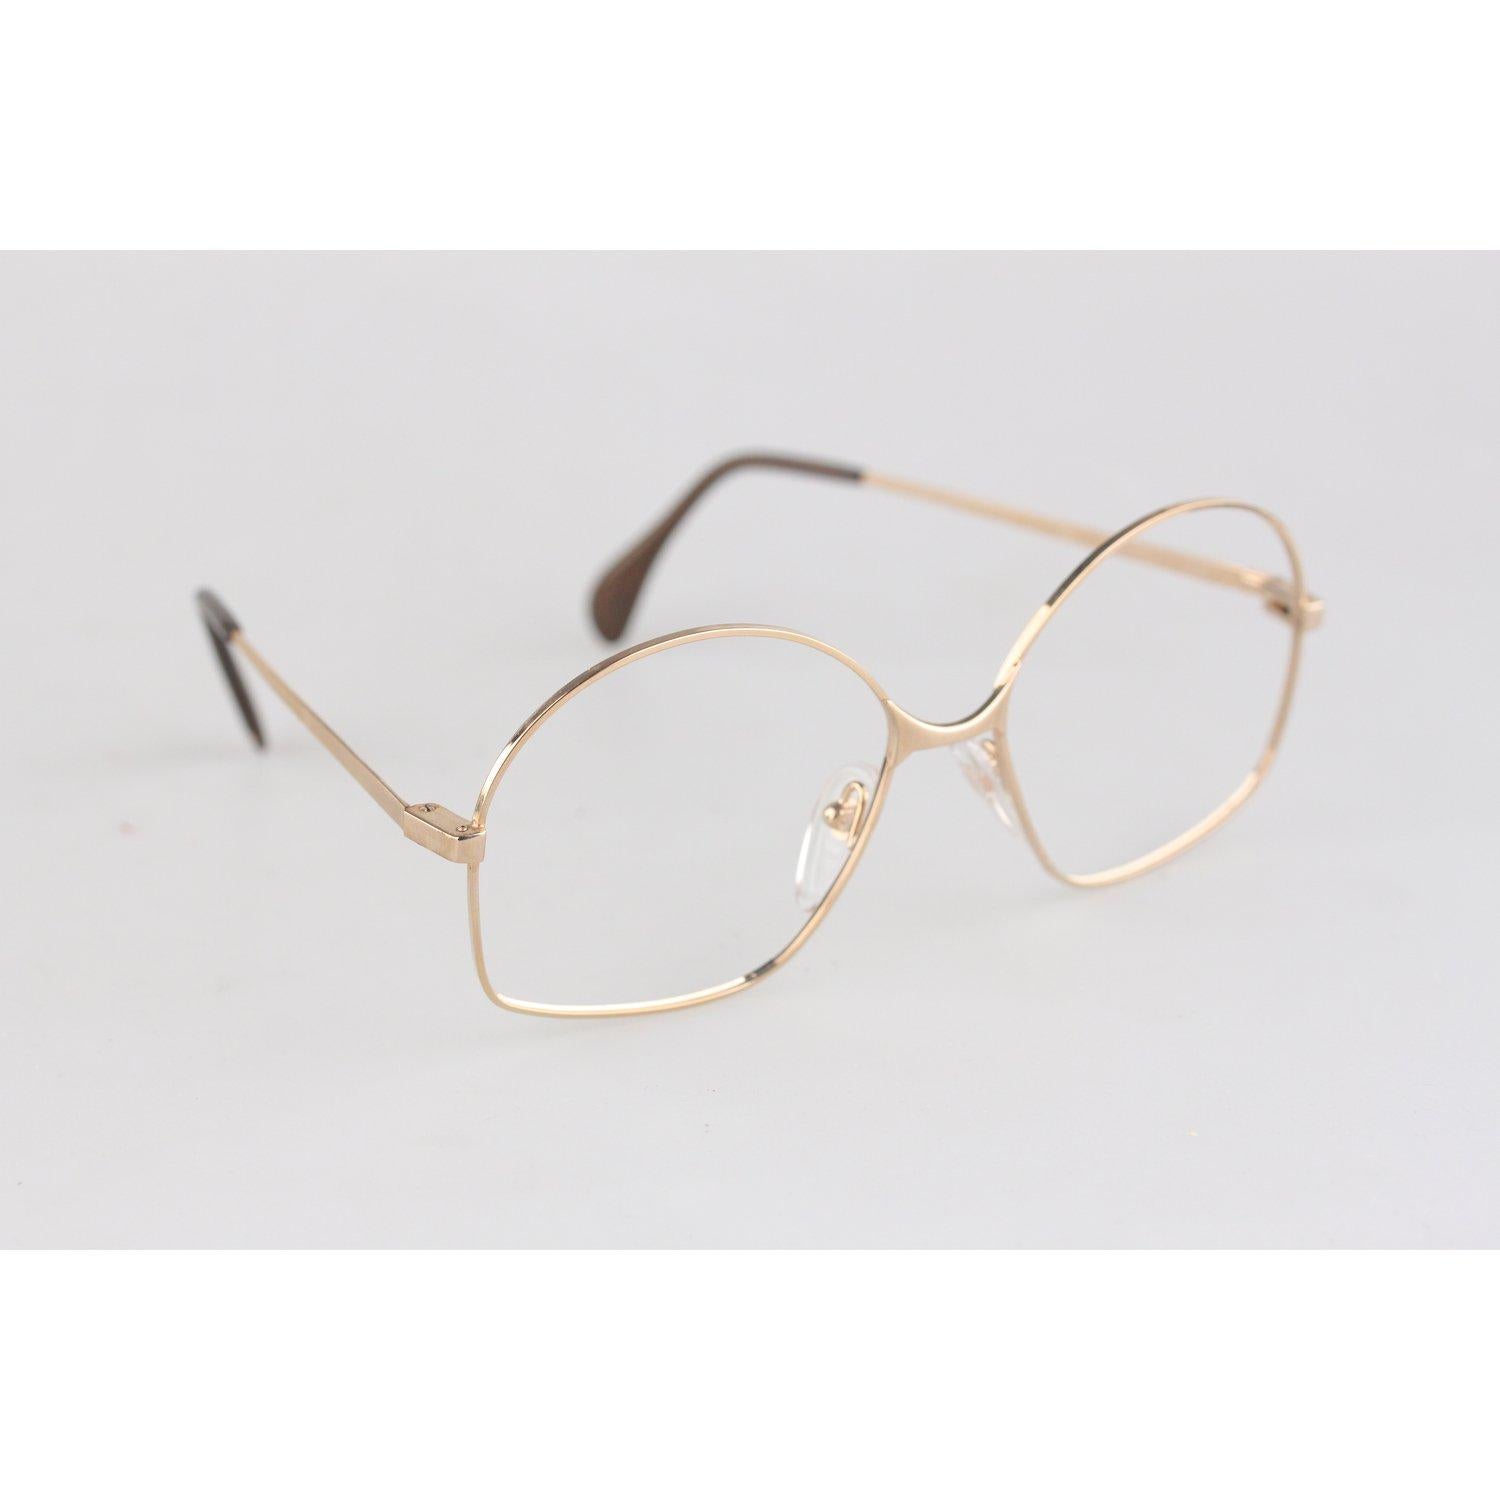 Vogue D'Or by Bausch & Lomb 1/20 10K GF Gold Mint Eyeglasses Mod 516 3